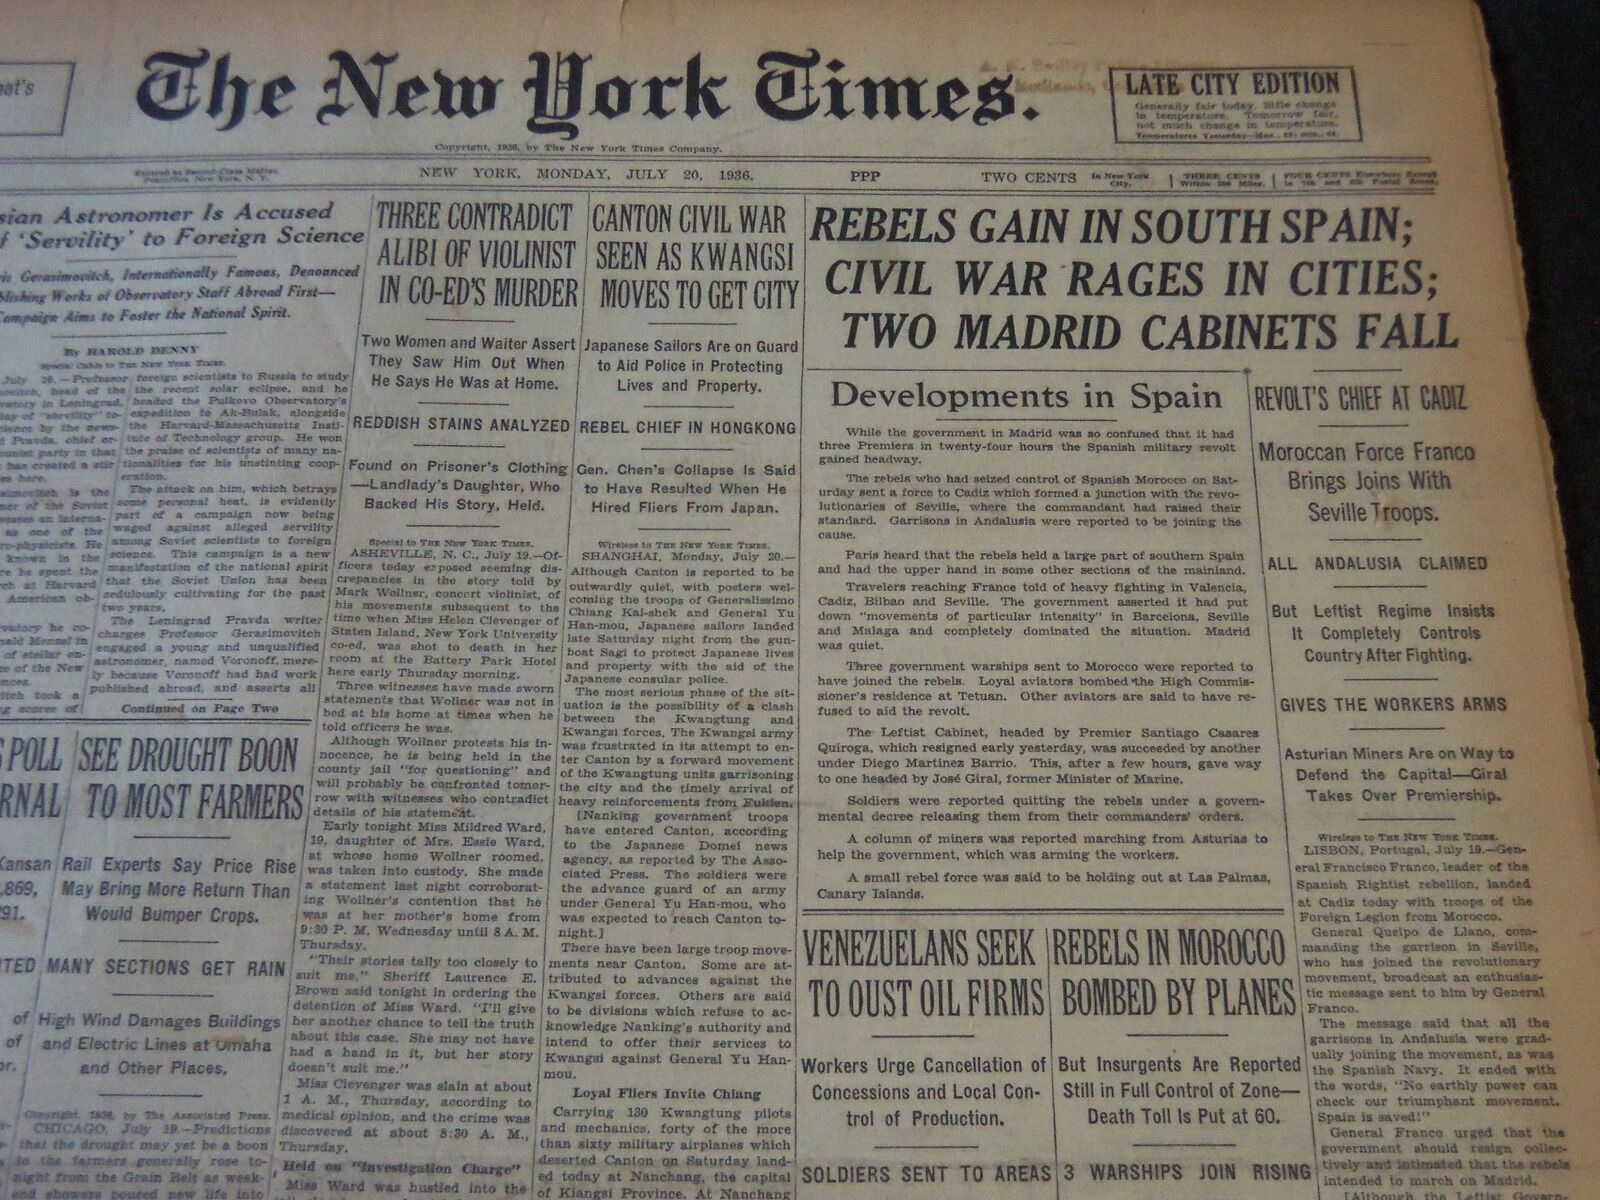 1936 JULY 20 NEW YORK TIMES - REBELS GAIN IN SOUTH SPAIN - NT 6722